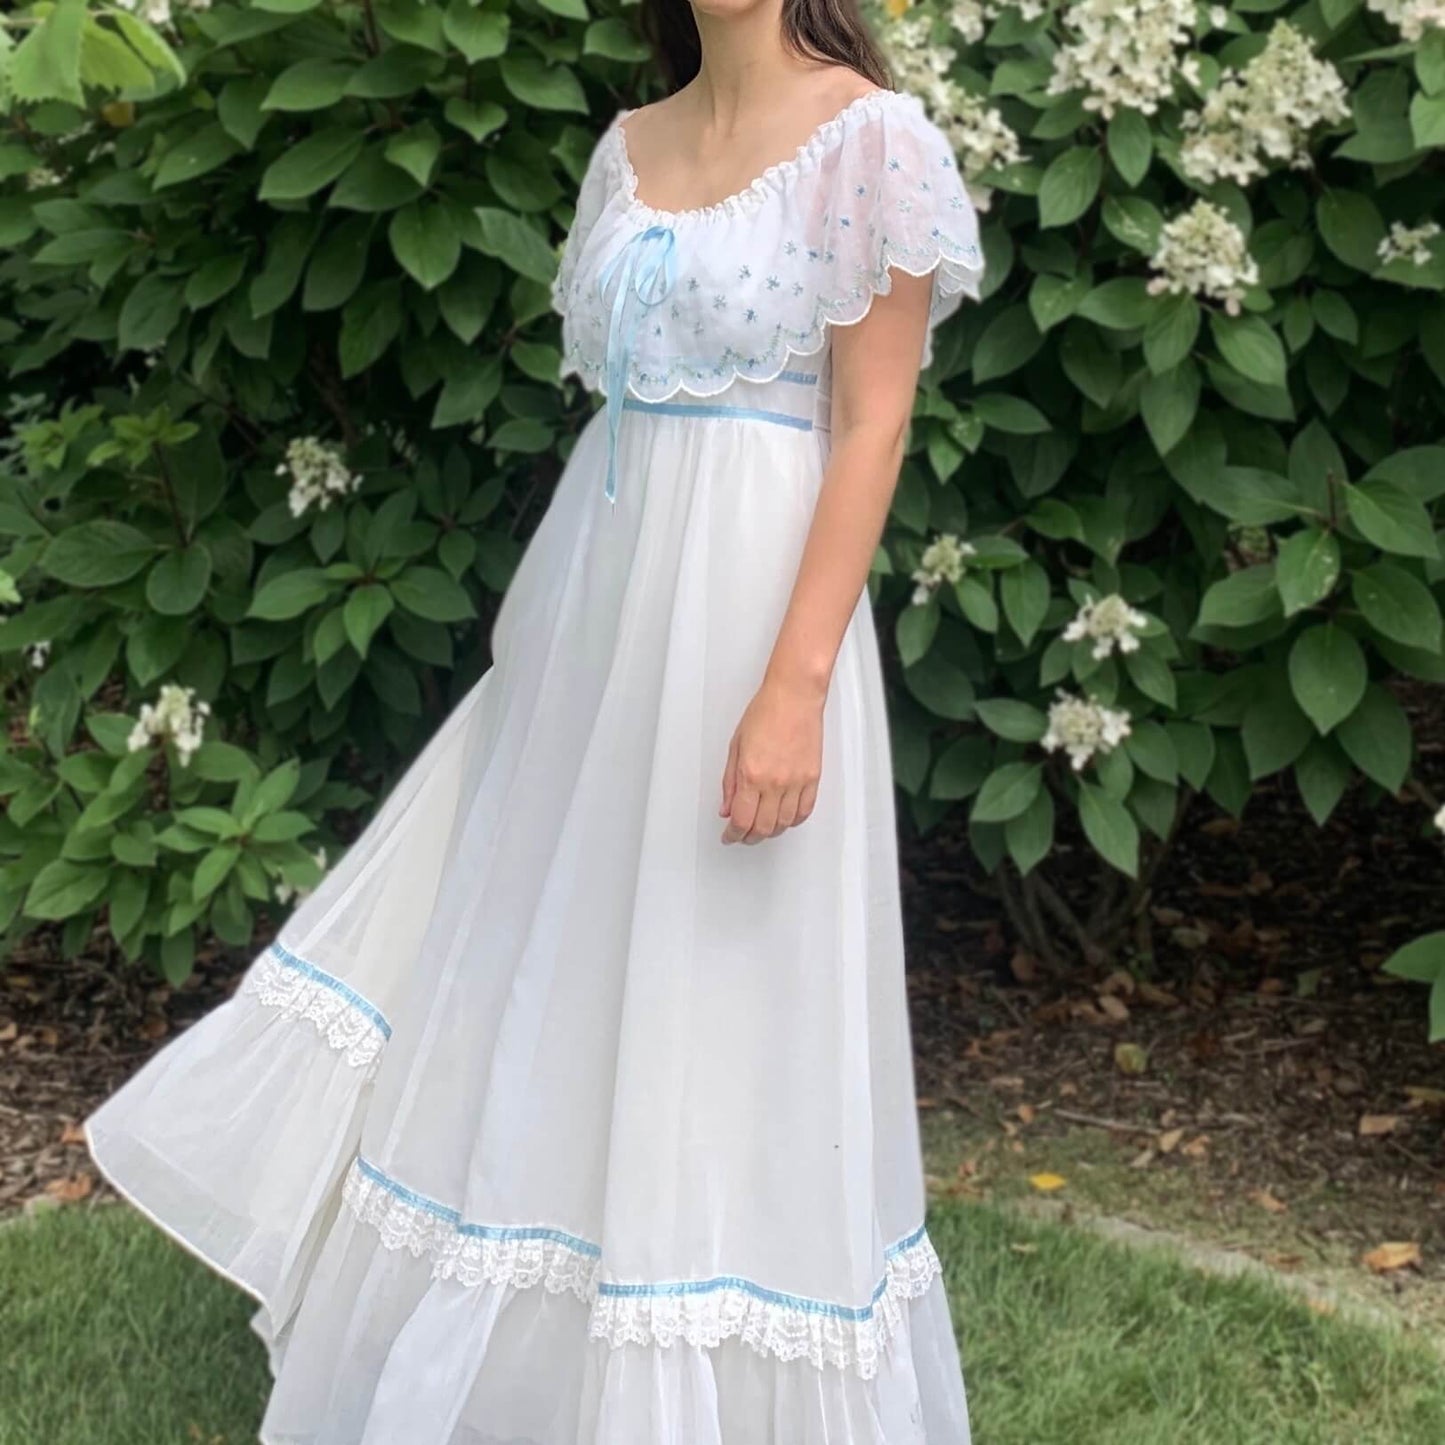 woman wearing a white Gunne Sax prairie dress outside